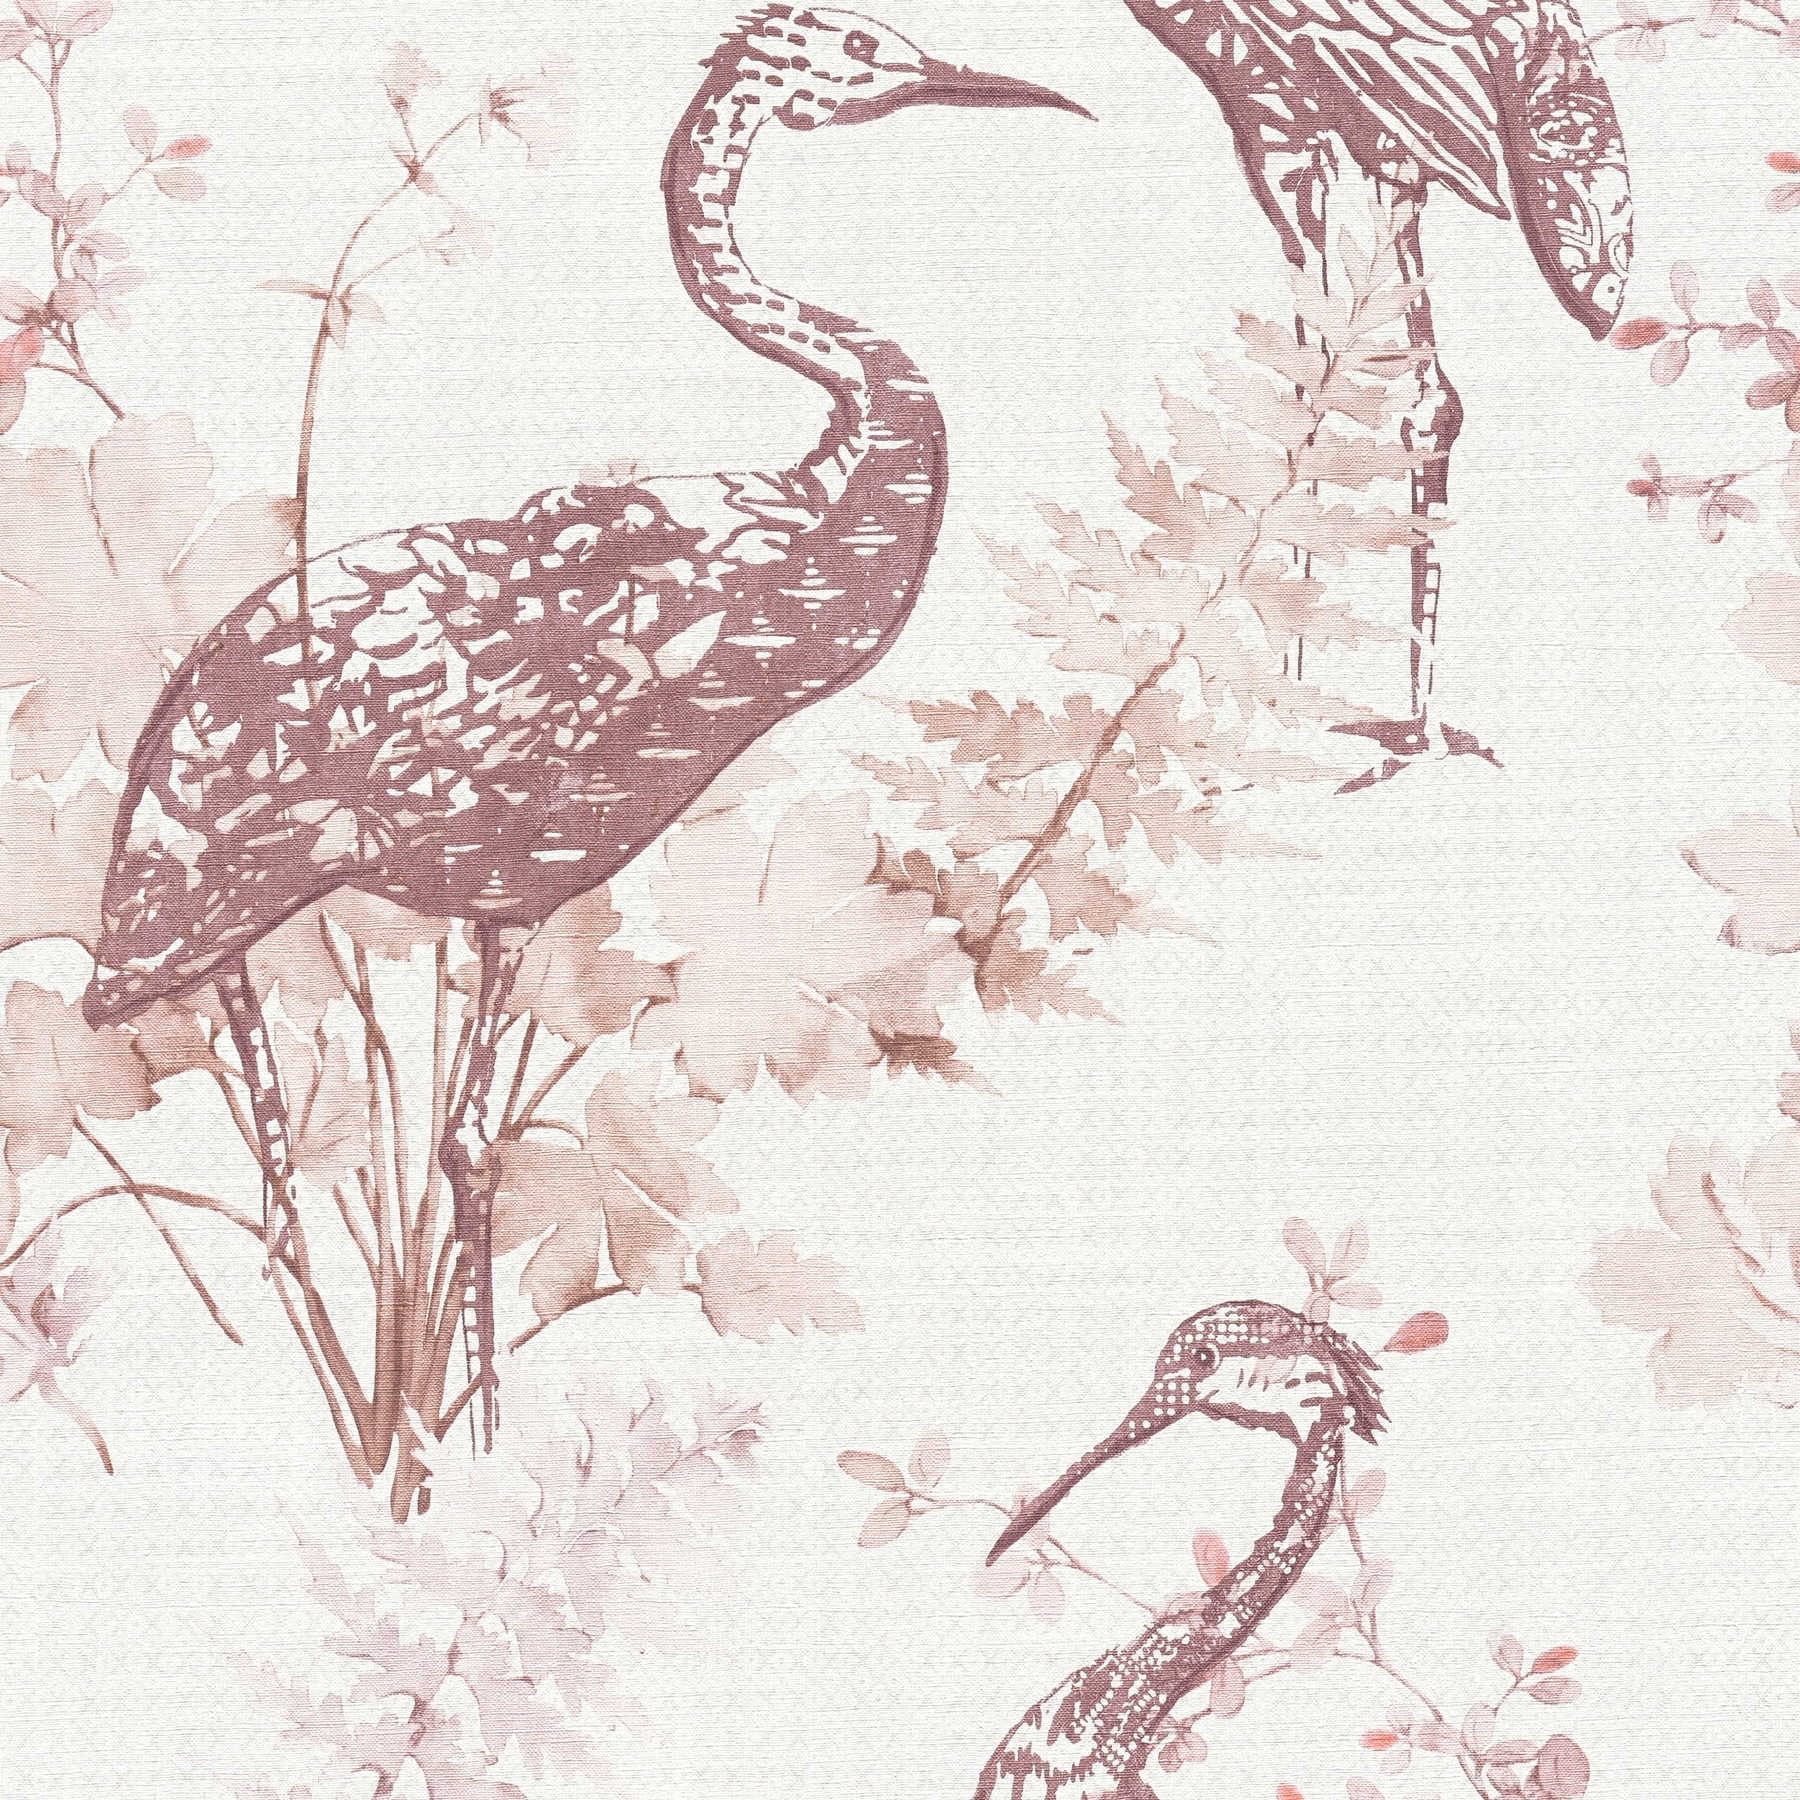             Carta da parati natura uccelli e foglie in stile acquerello - beige, rosa
        